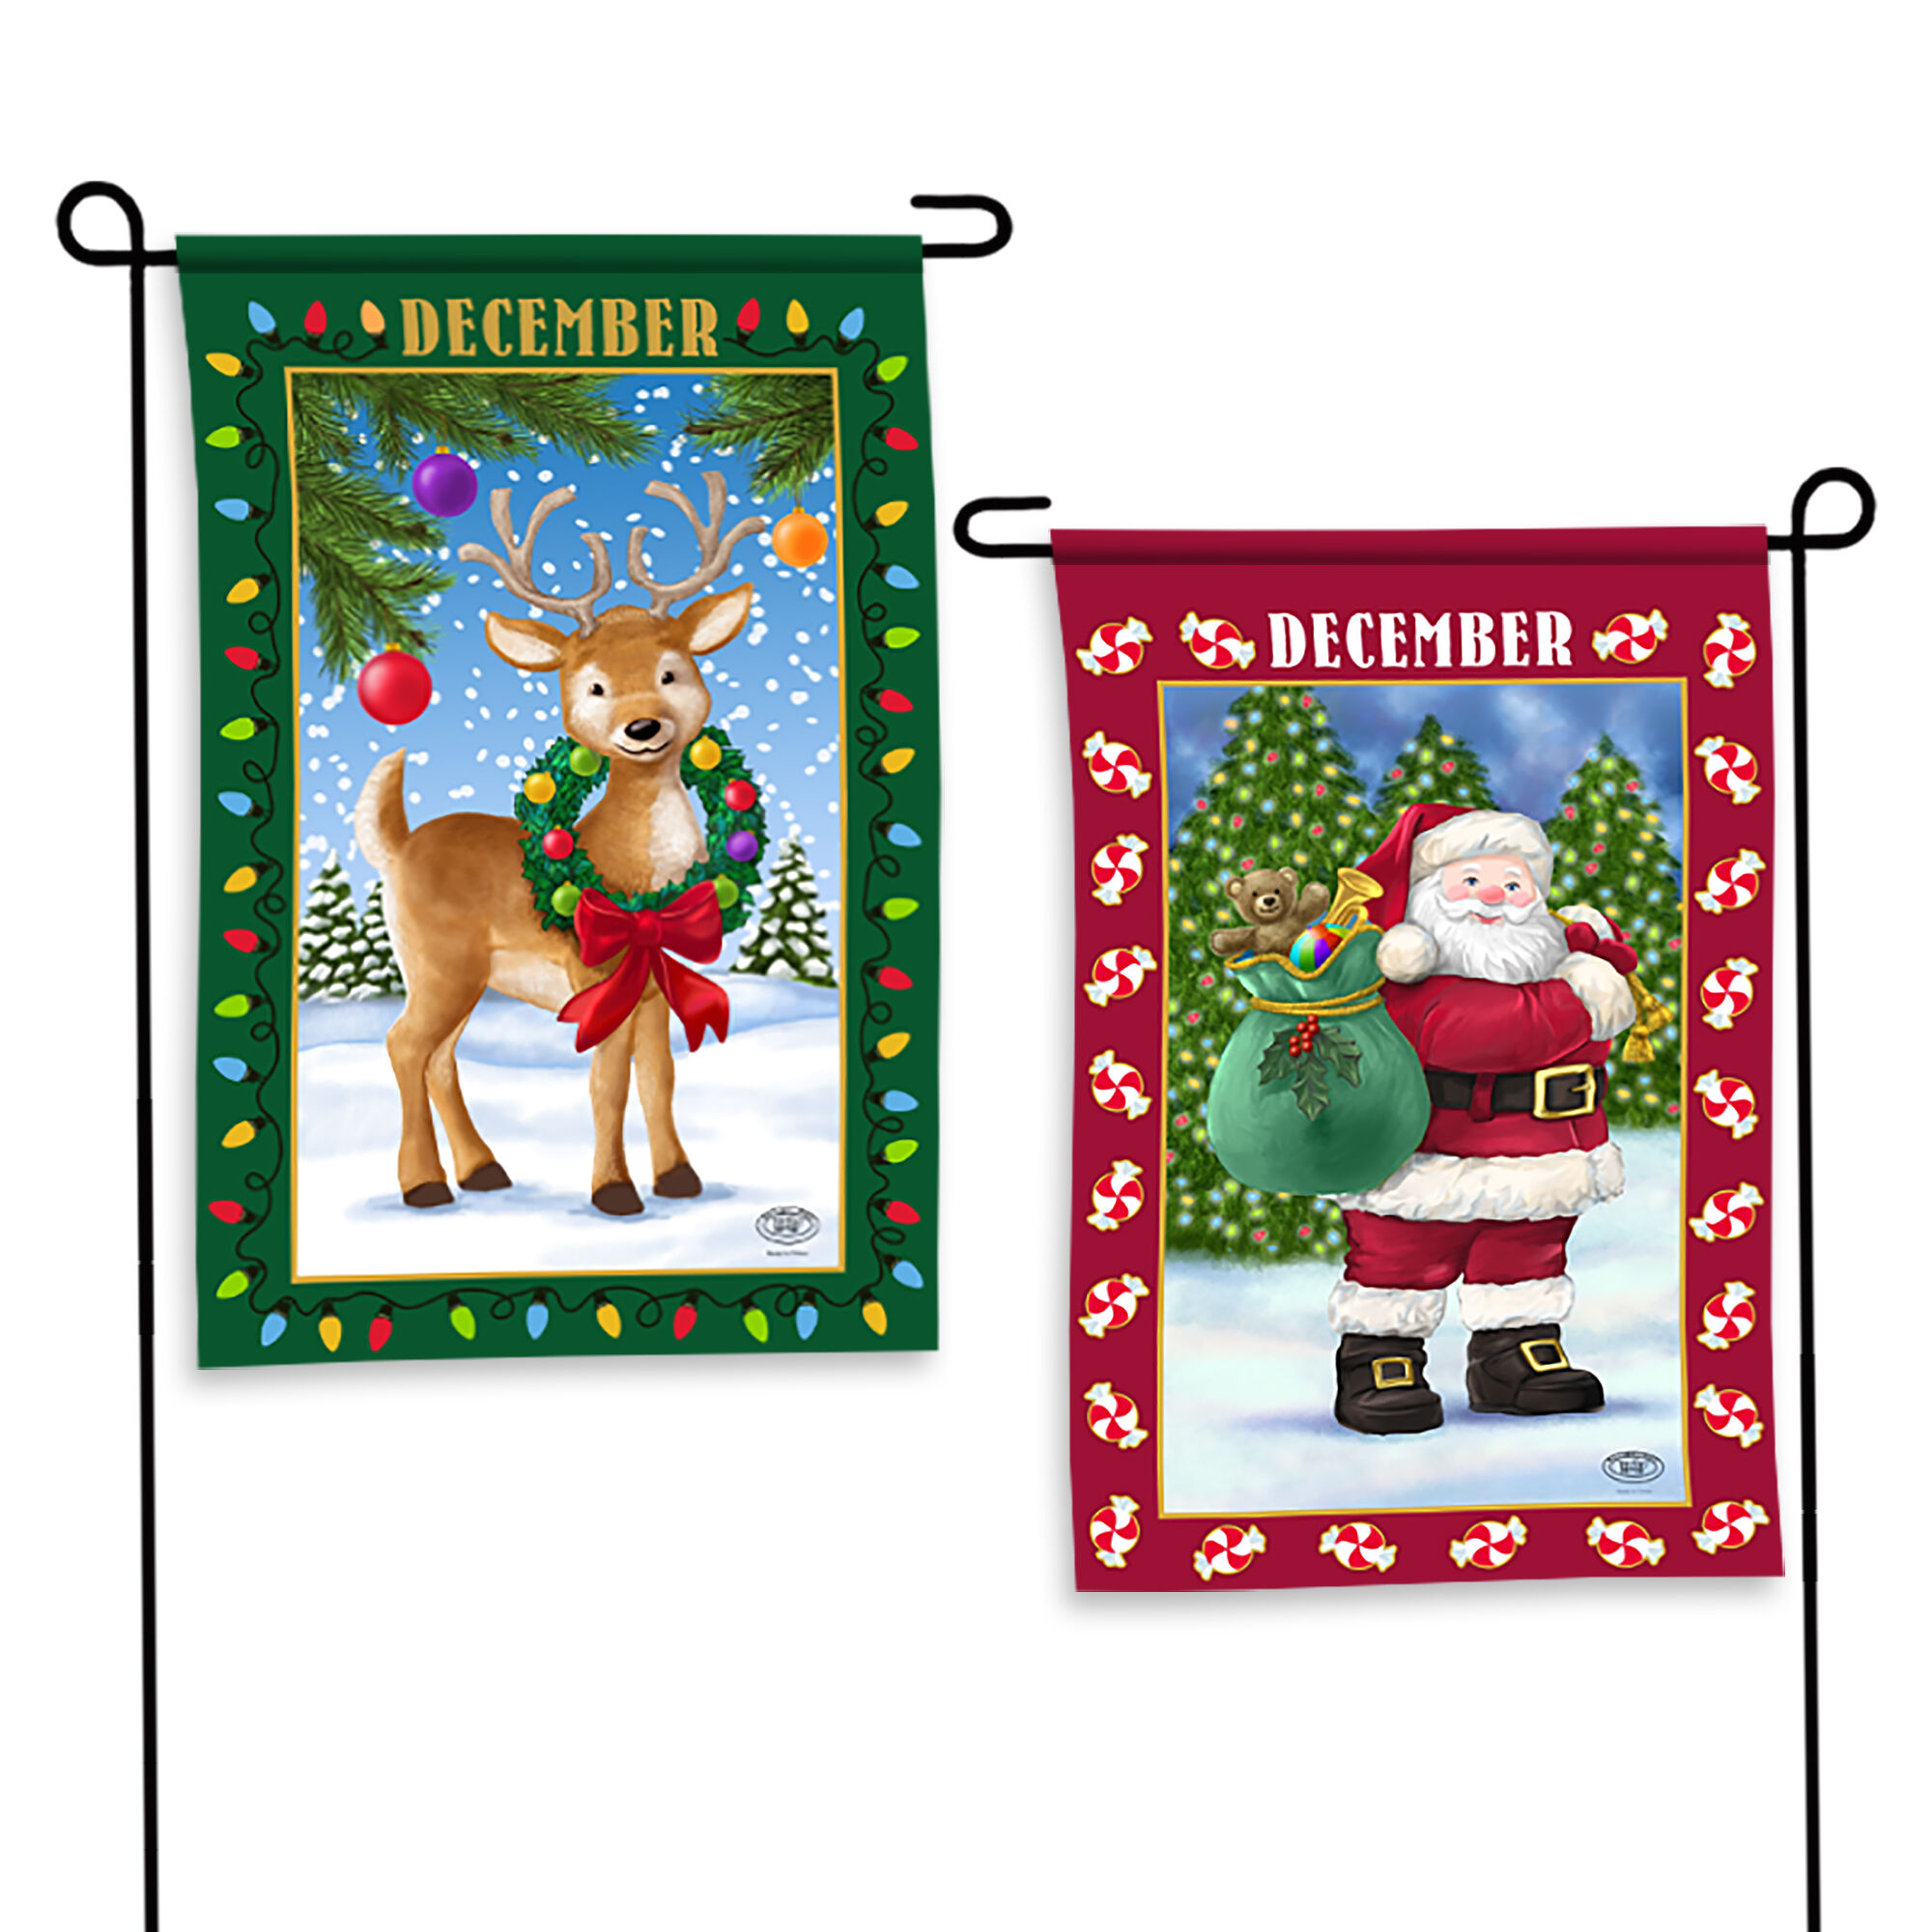 Year of Cheer Garden Flags 6547 0015 e December